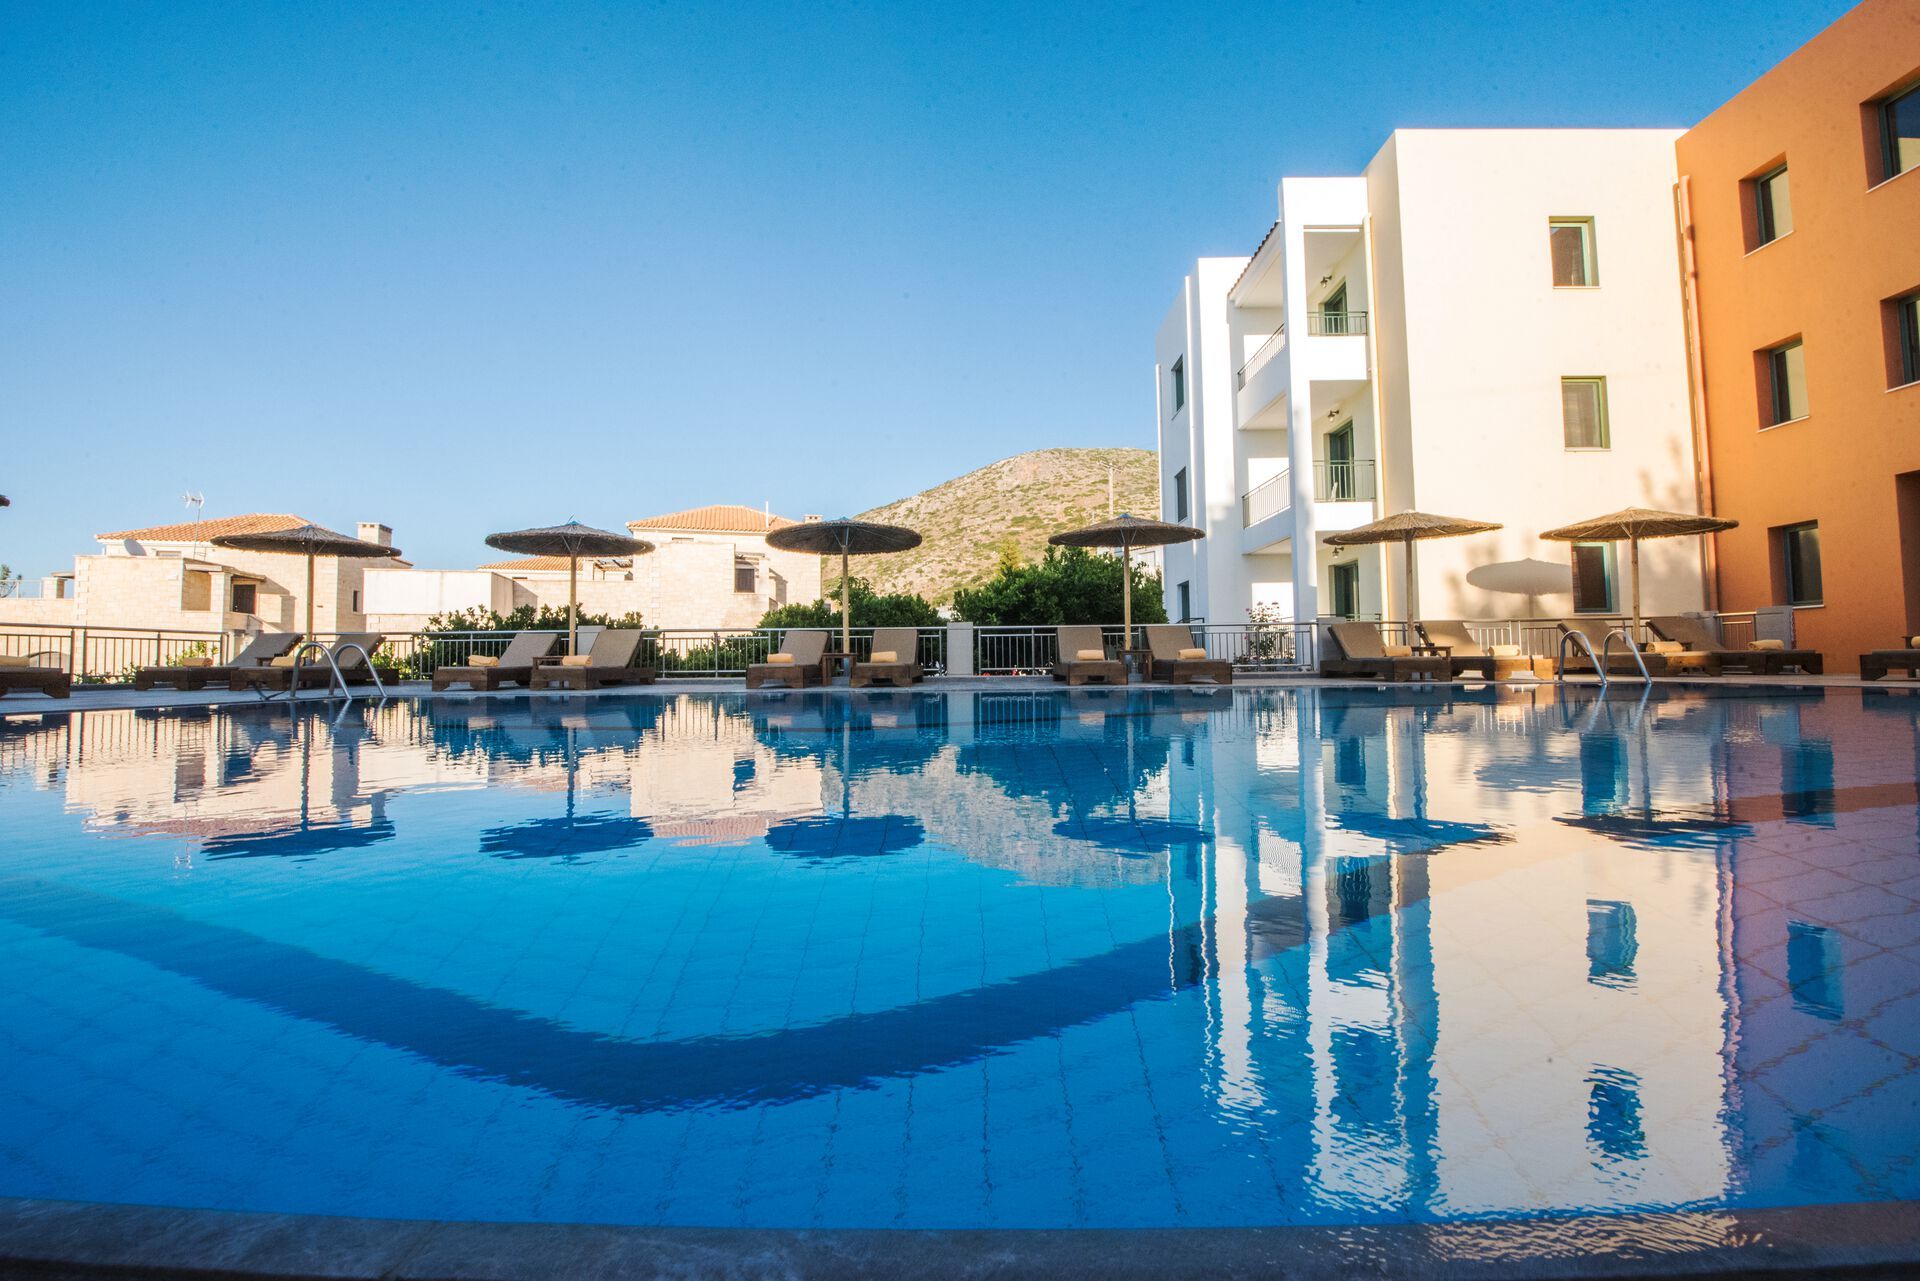 Crète - Hersonissos - Grèce - Iles grecques - Hotel Mitos Village 4*